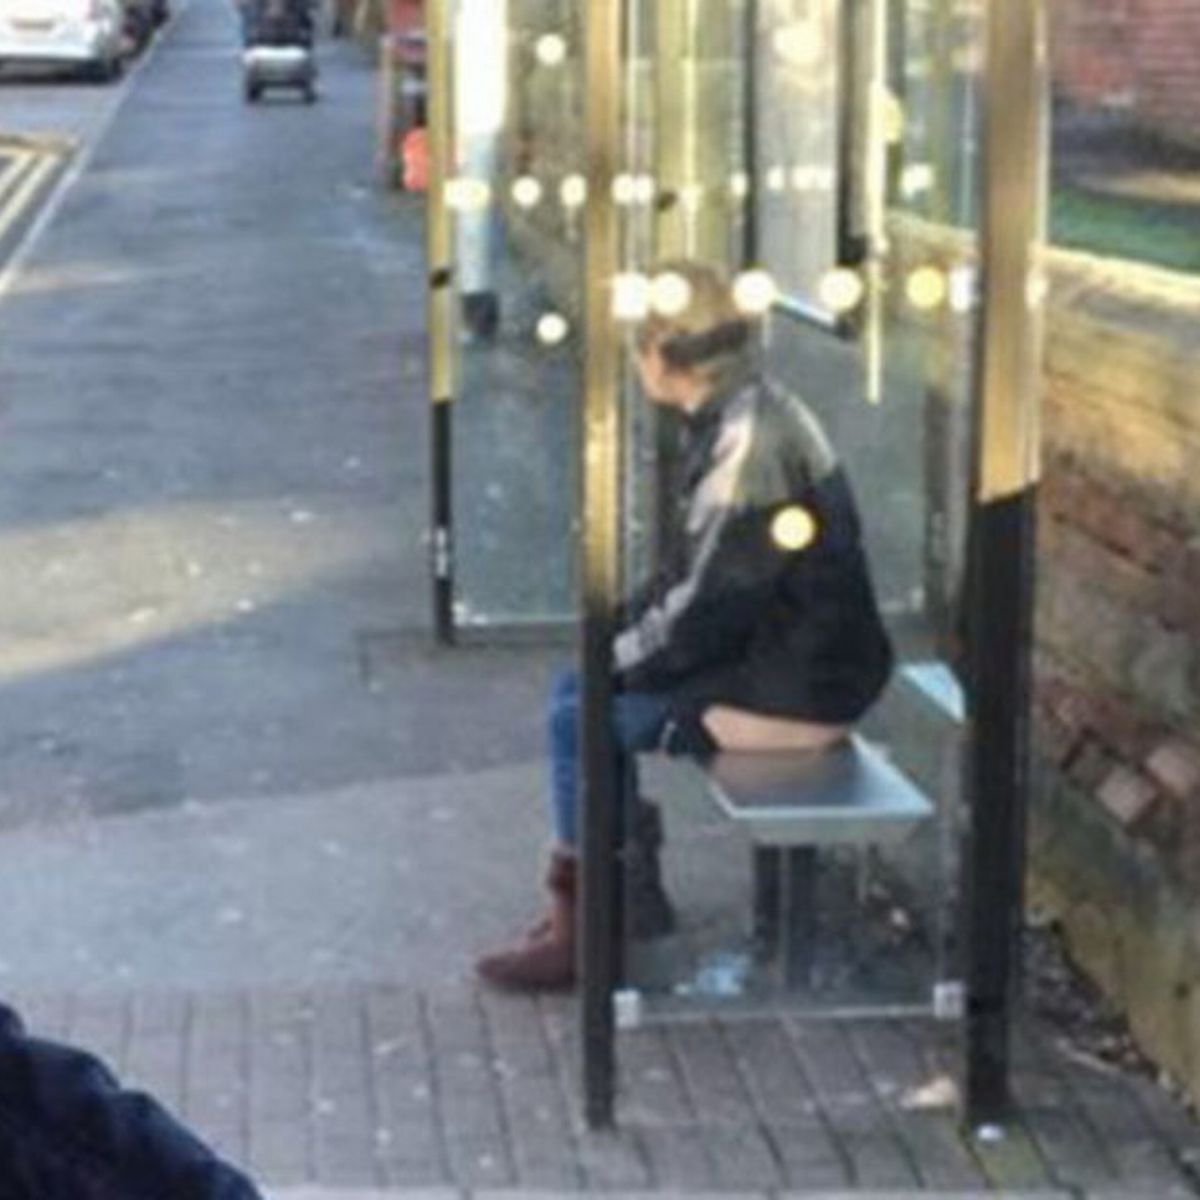 damian garvey add woman urinating in public photo